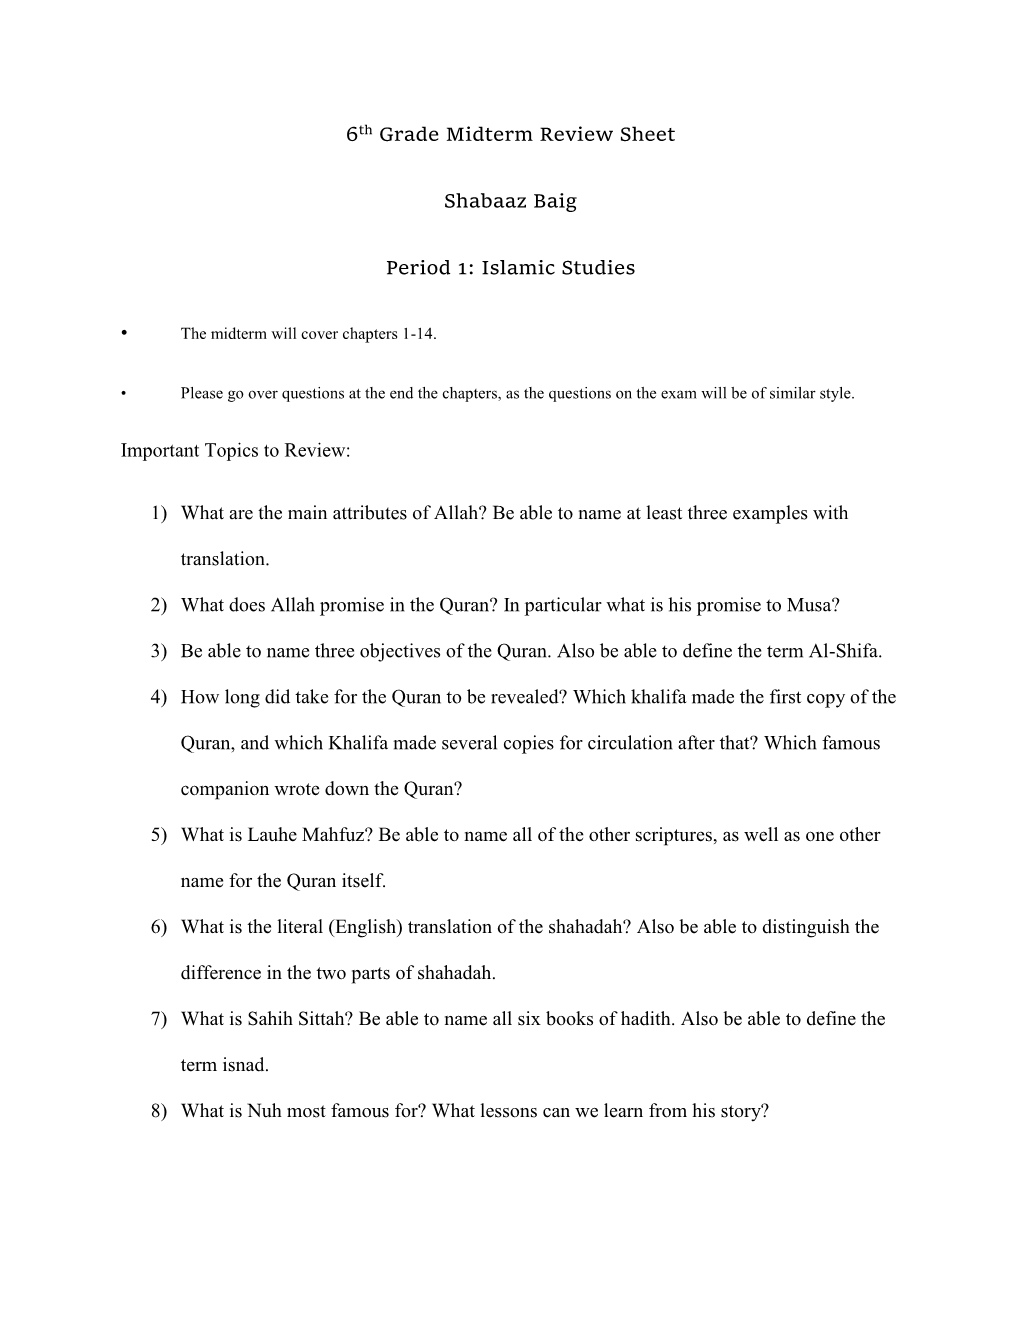 6Th Grade Midterm Review Sheet Shabaaz Baig Period 1